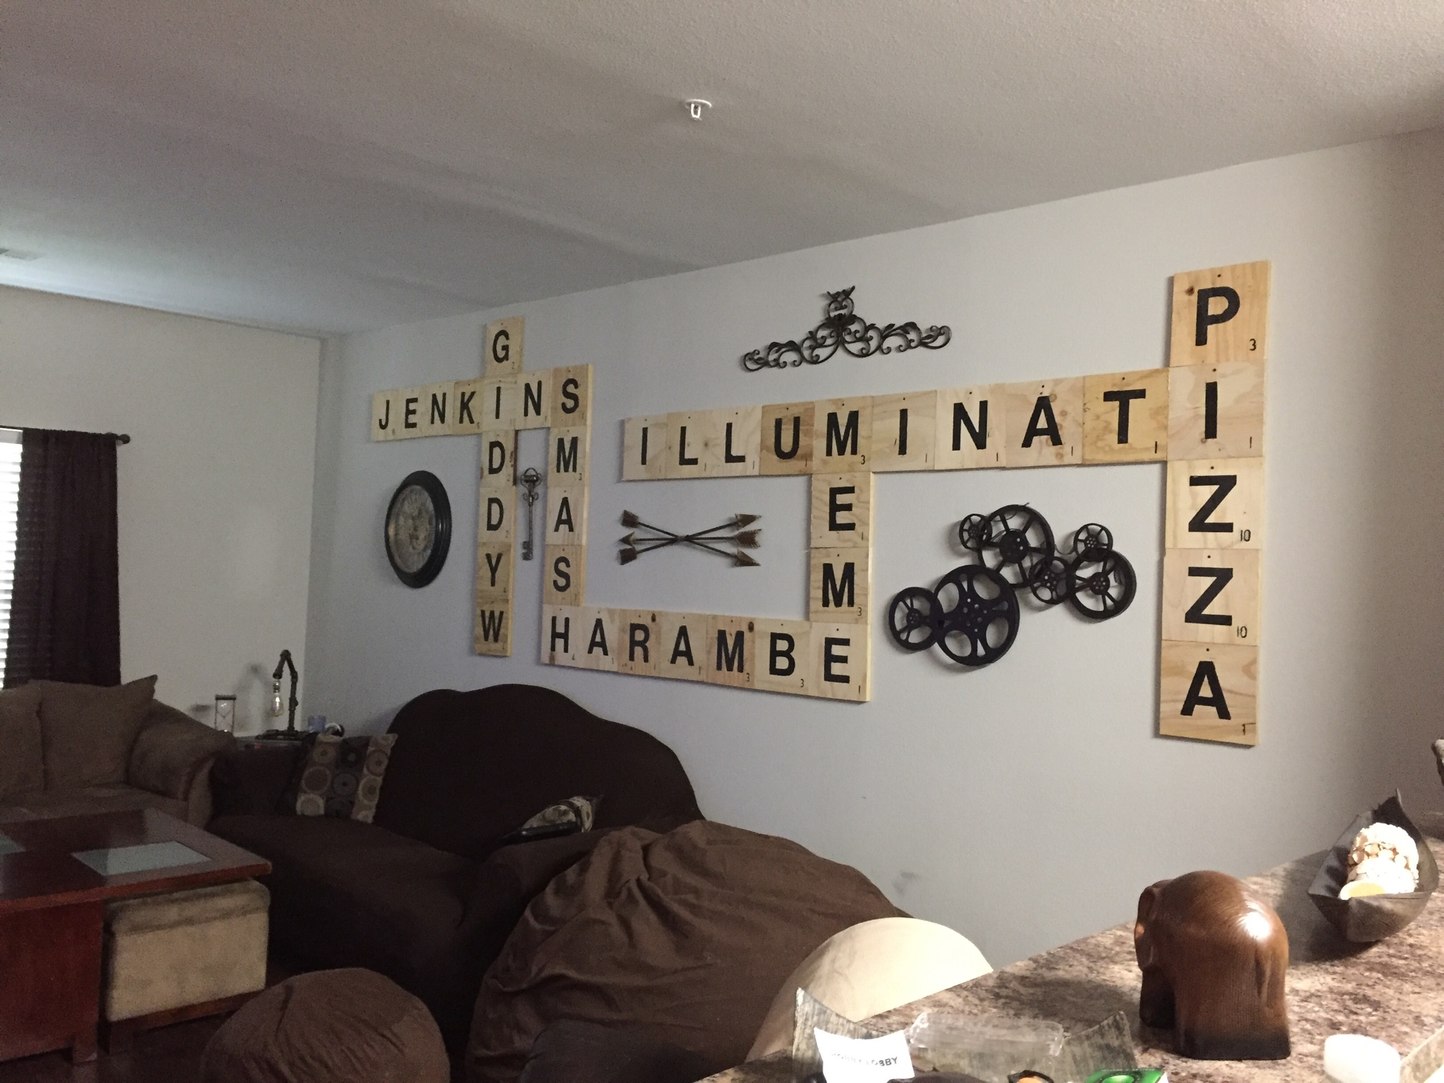 Scrabble wall art I did to my living room! - meme